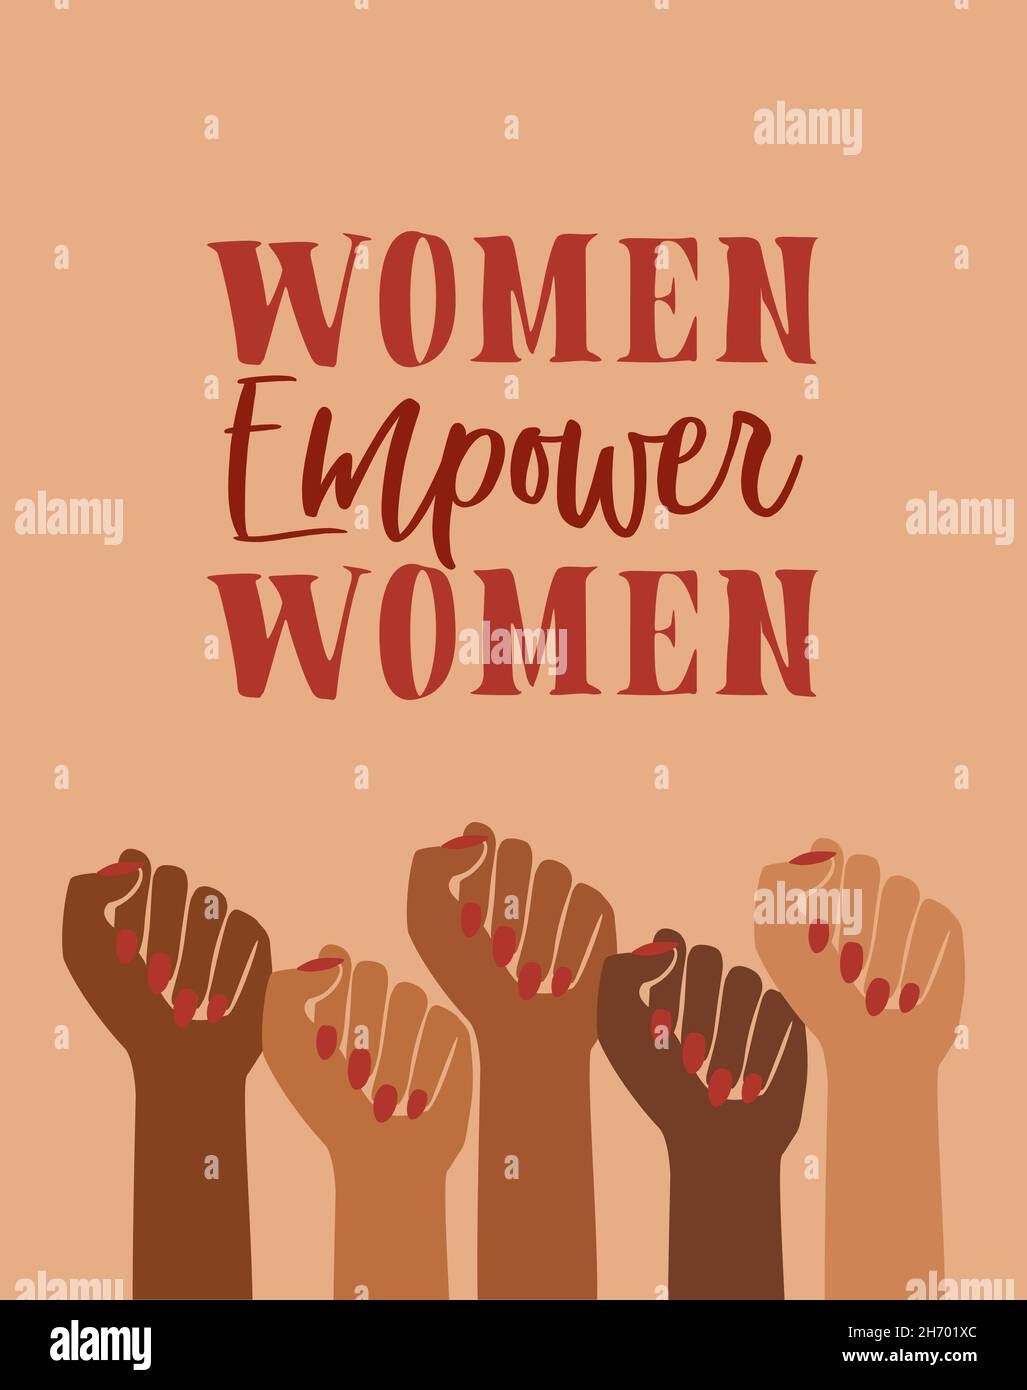 women empower, female empowerment, brown power, feminine, feminist pride, hands fist raised, retro graphic design, gender equality issue strong women, Stock Photo